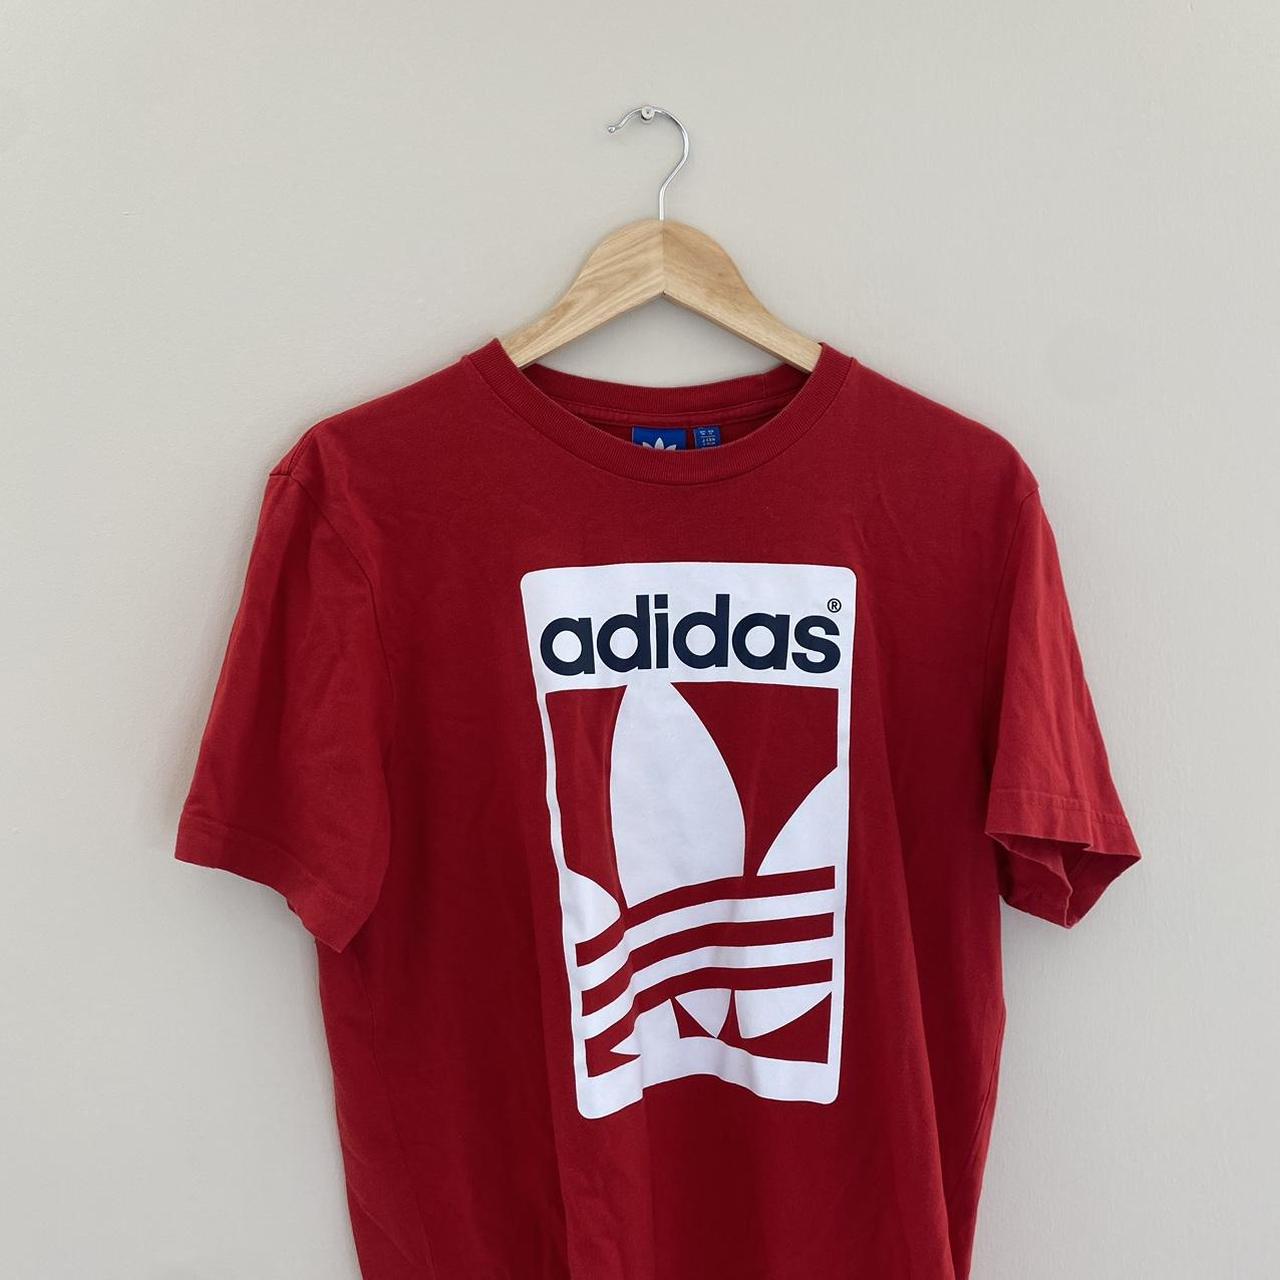 Adidas logo T-shirt - Printed logo - Red and white... - Depop